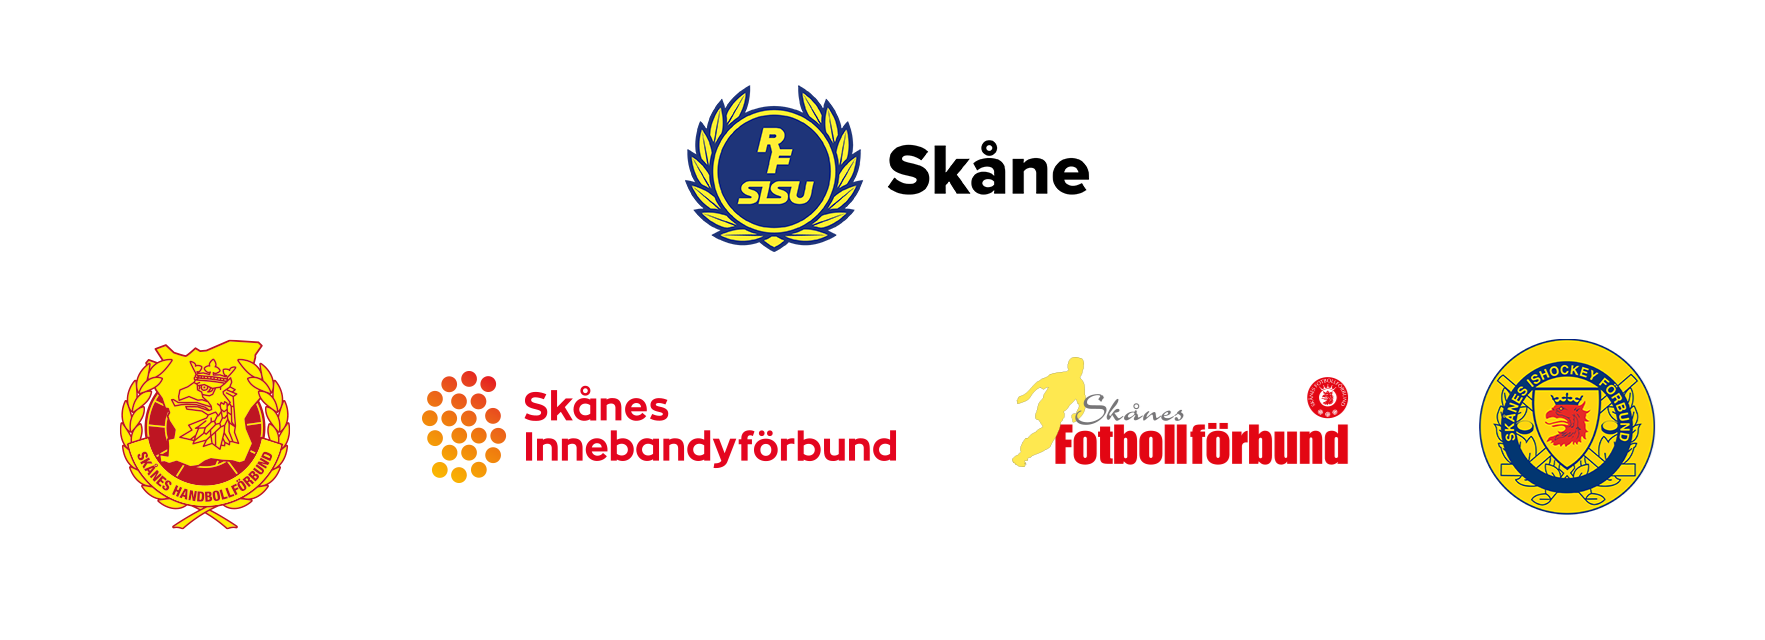 Logotyper med Skånes ishockeyförbund, Skånes fotbollsförbund, Skånes Ridsportförbund, Skånes Innebandyförbund samt RF-SISU Skåne